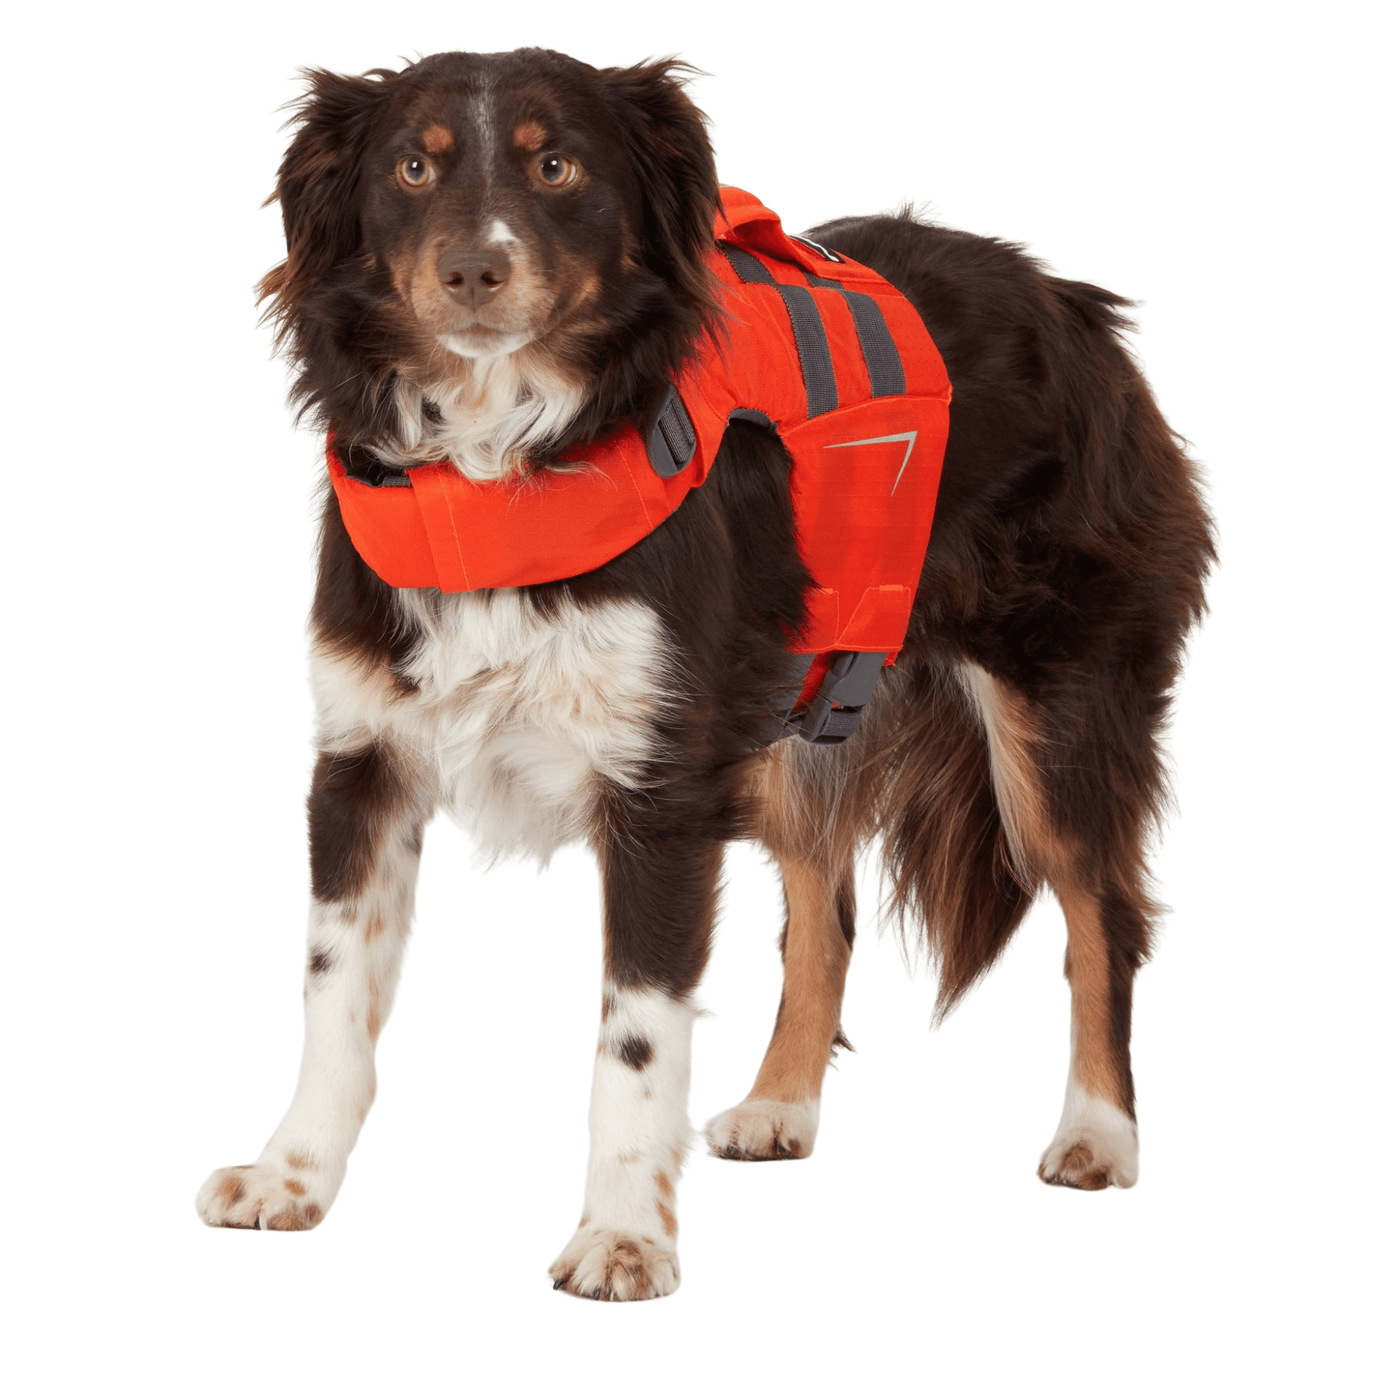 NRS Canine Flotation Device | Dog PFD | Further Faster Christchurch NZ #teal-nrs